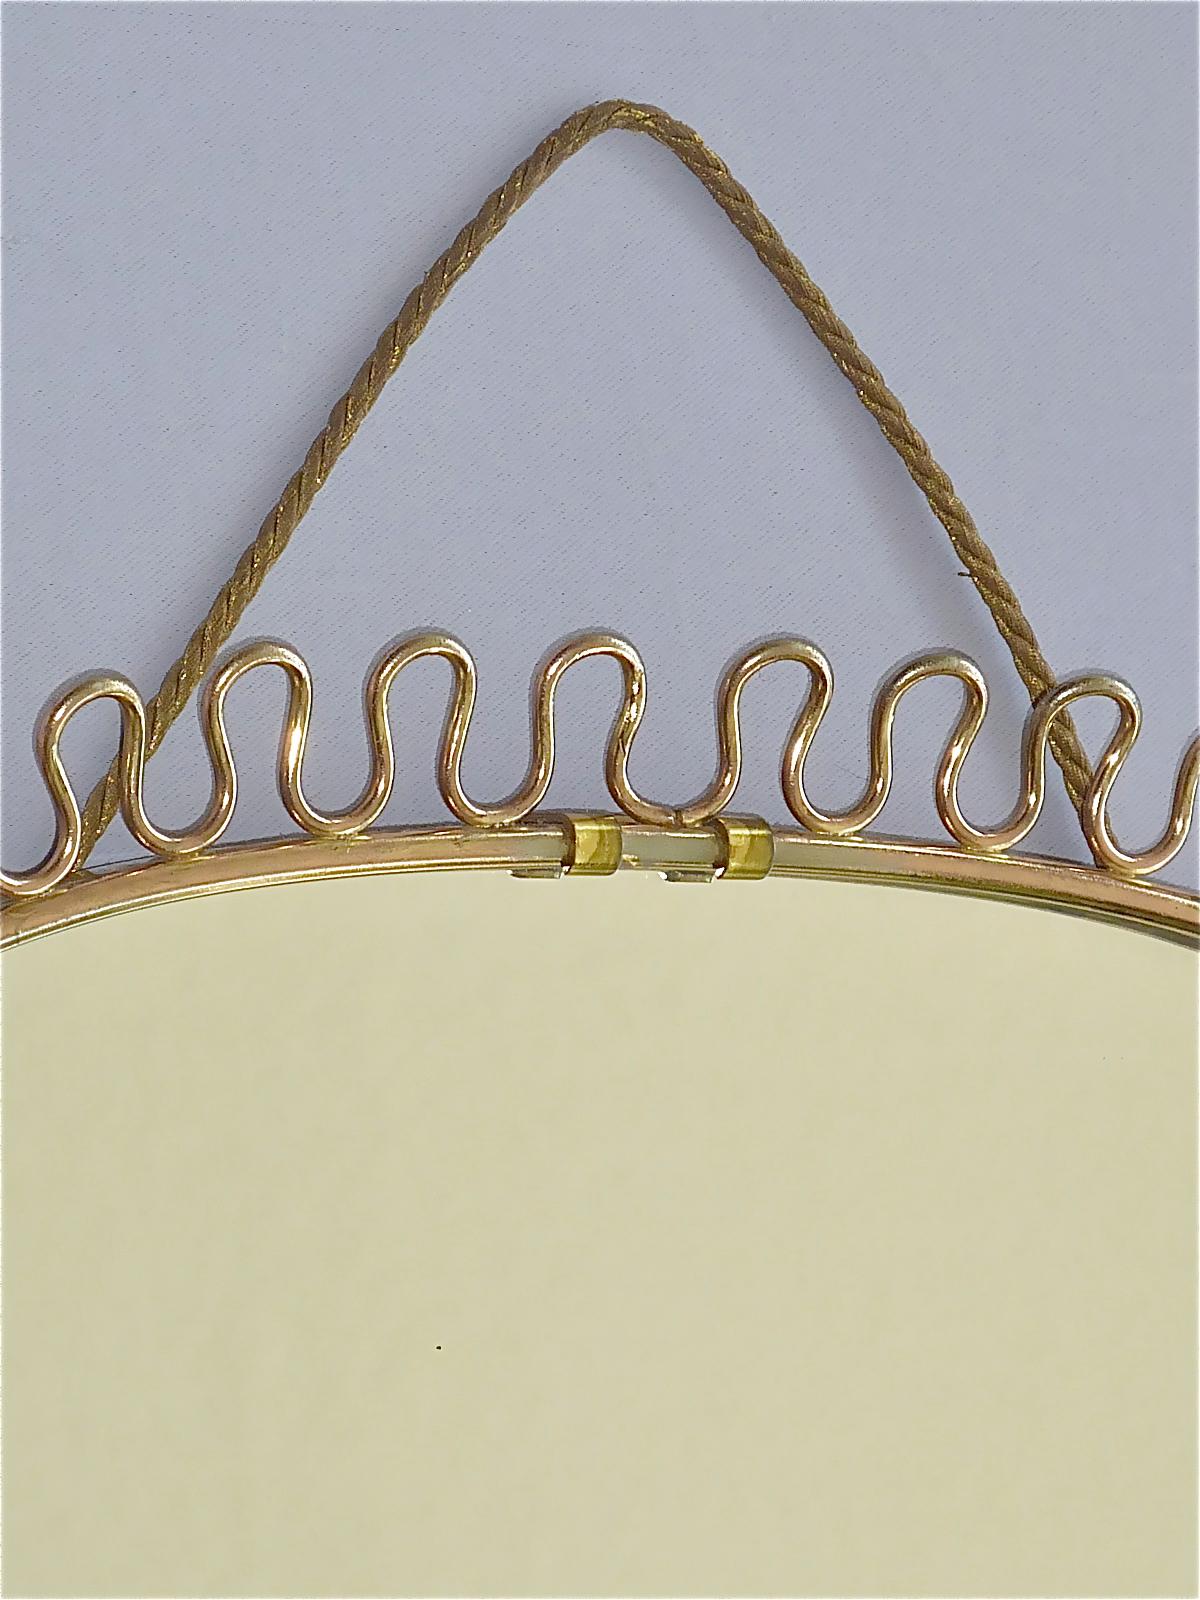 Austrian Midcentury Wall Mirror by Josef Frank Svenskt Tenn, Austria, Sweden Brass, 1950s